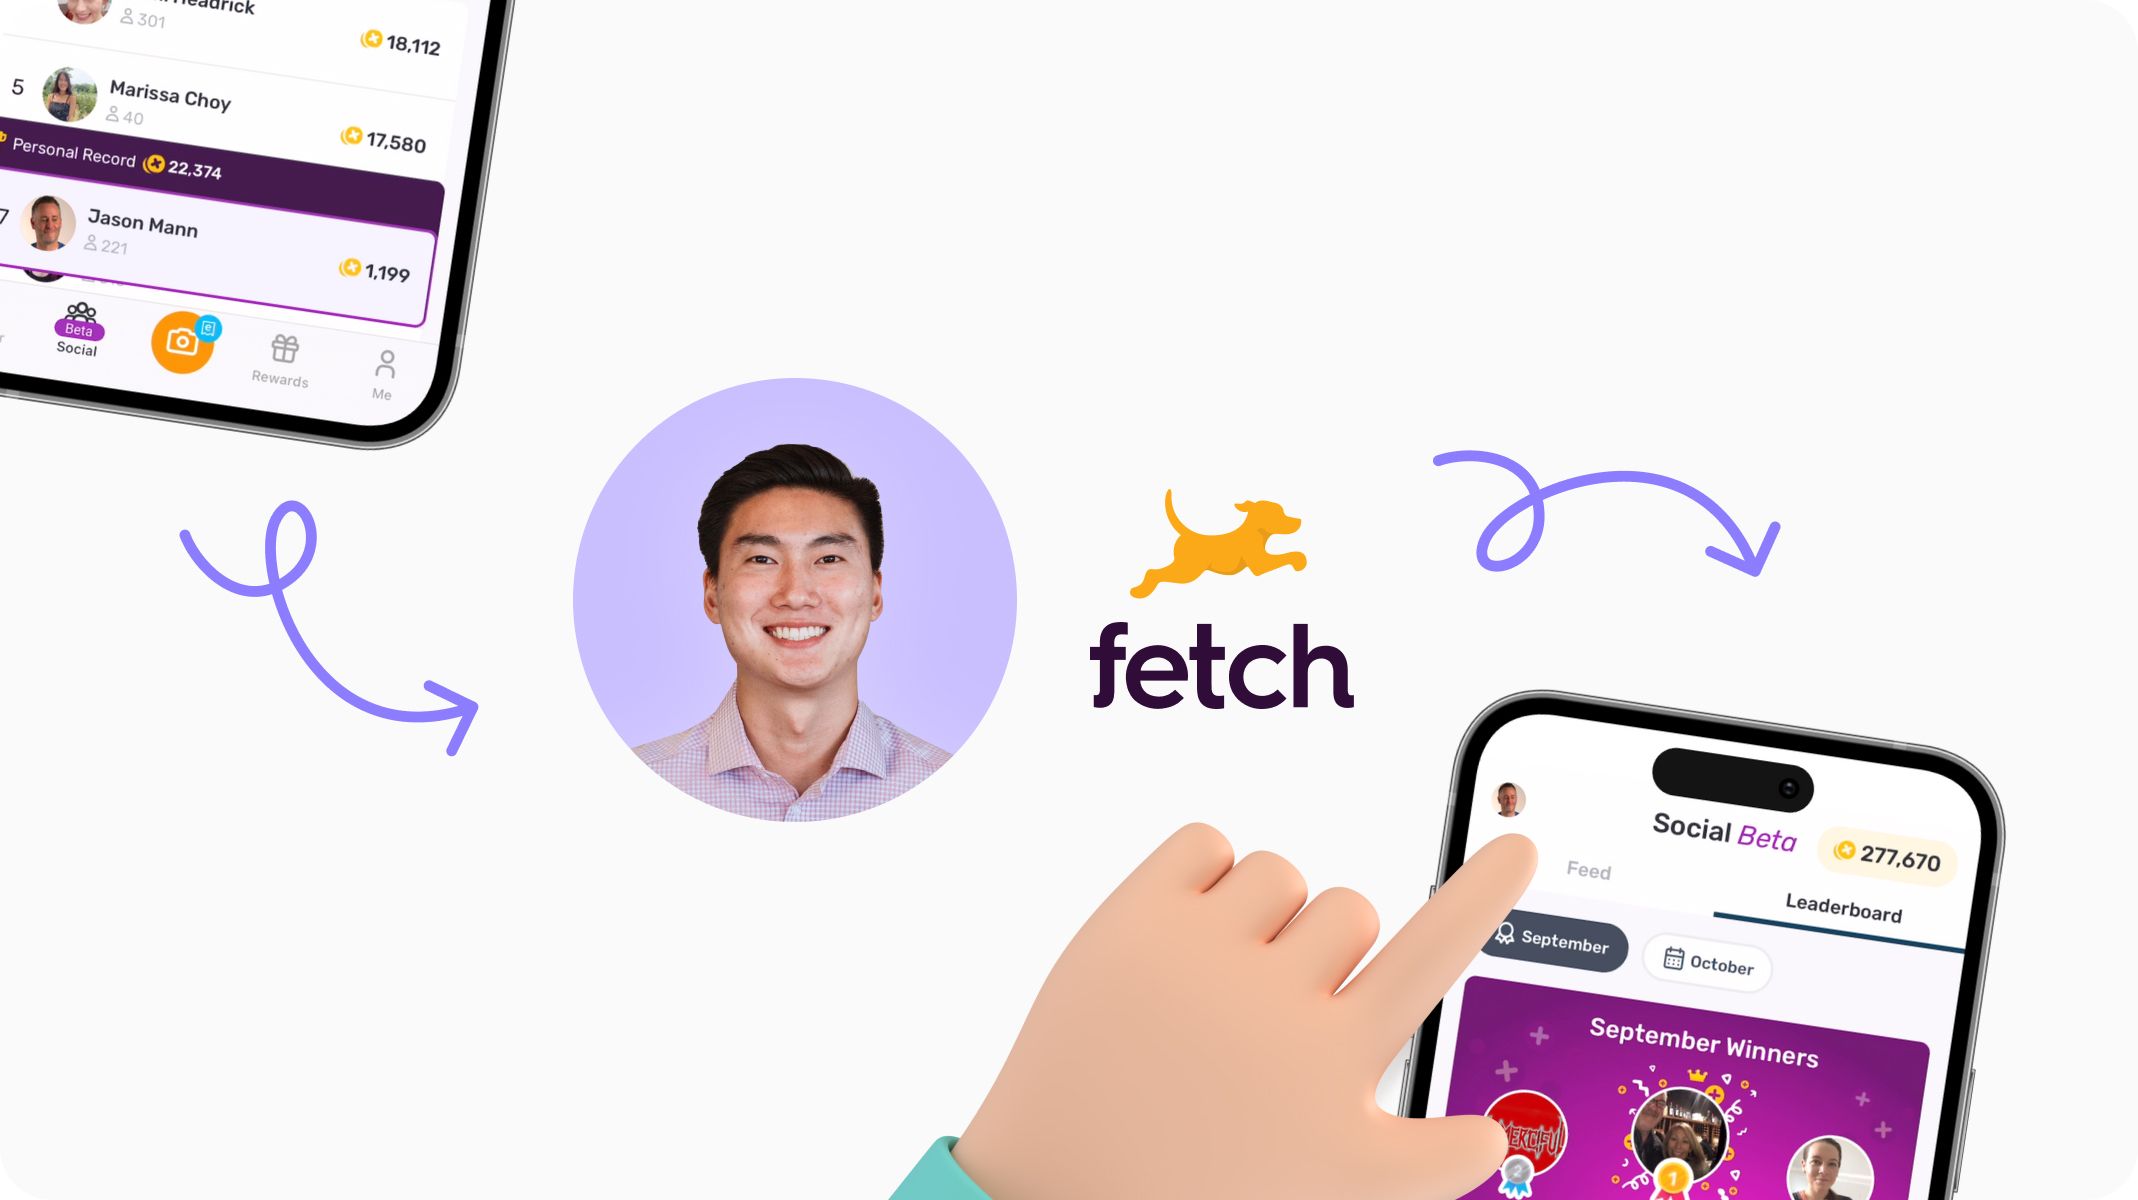 webinar guest speaker profile picture next to fetch logo